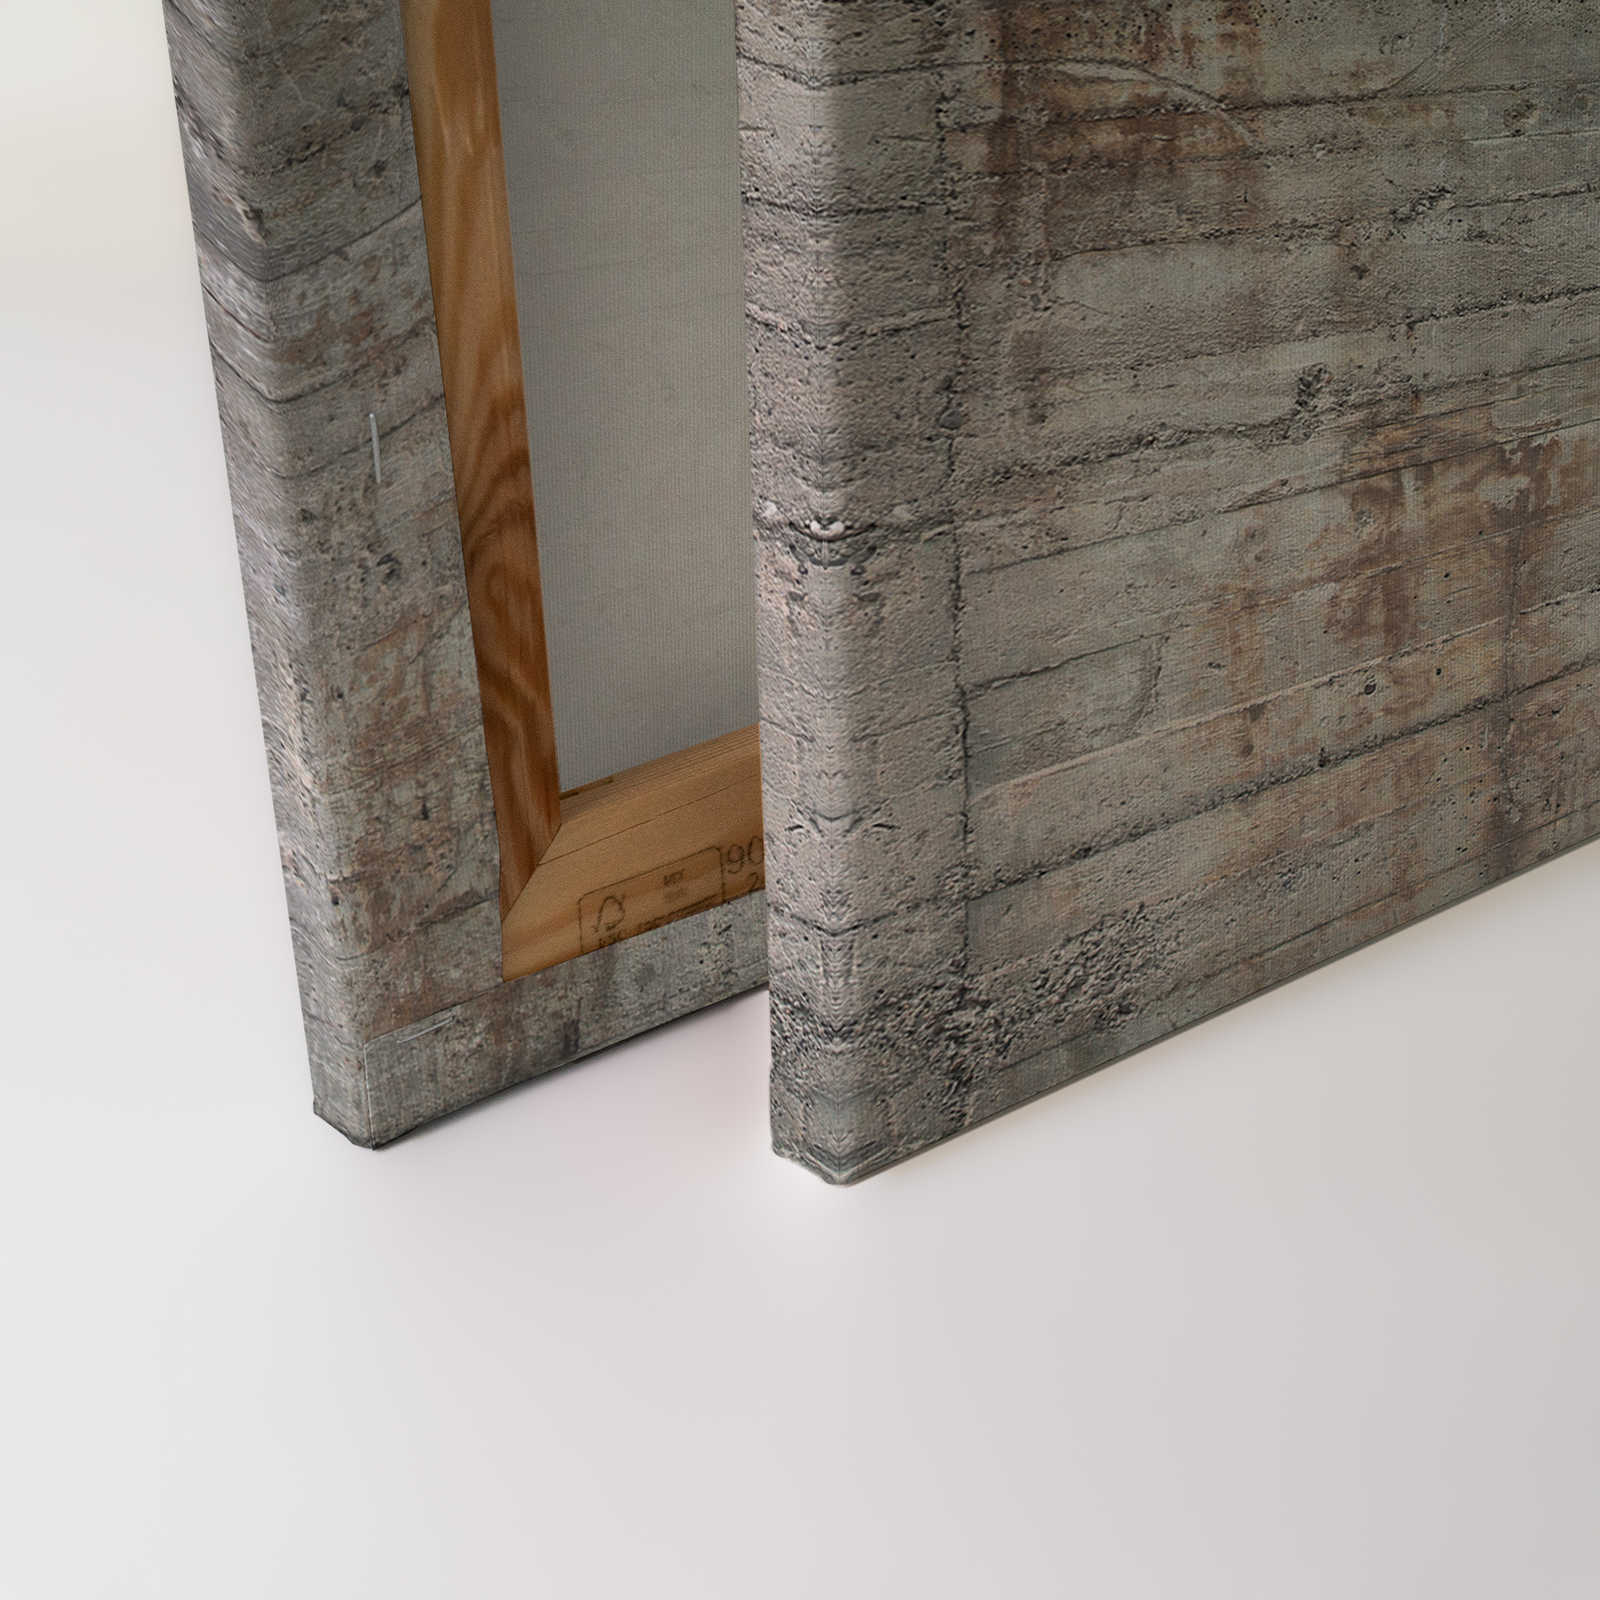             Beton Leinwandbild rustikaler Stahlbeton Grau Braun – 1,20 m x 0,80 m
        